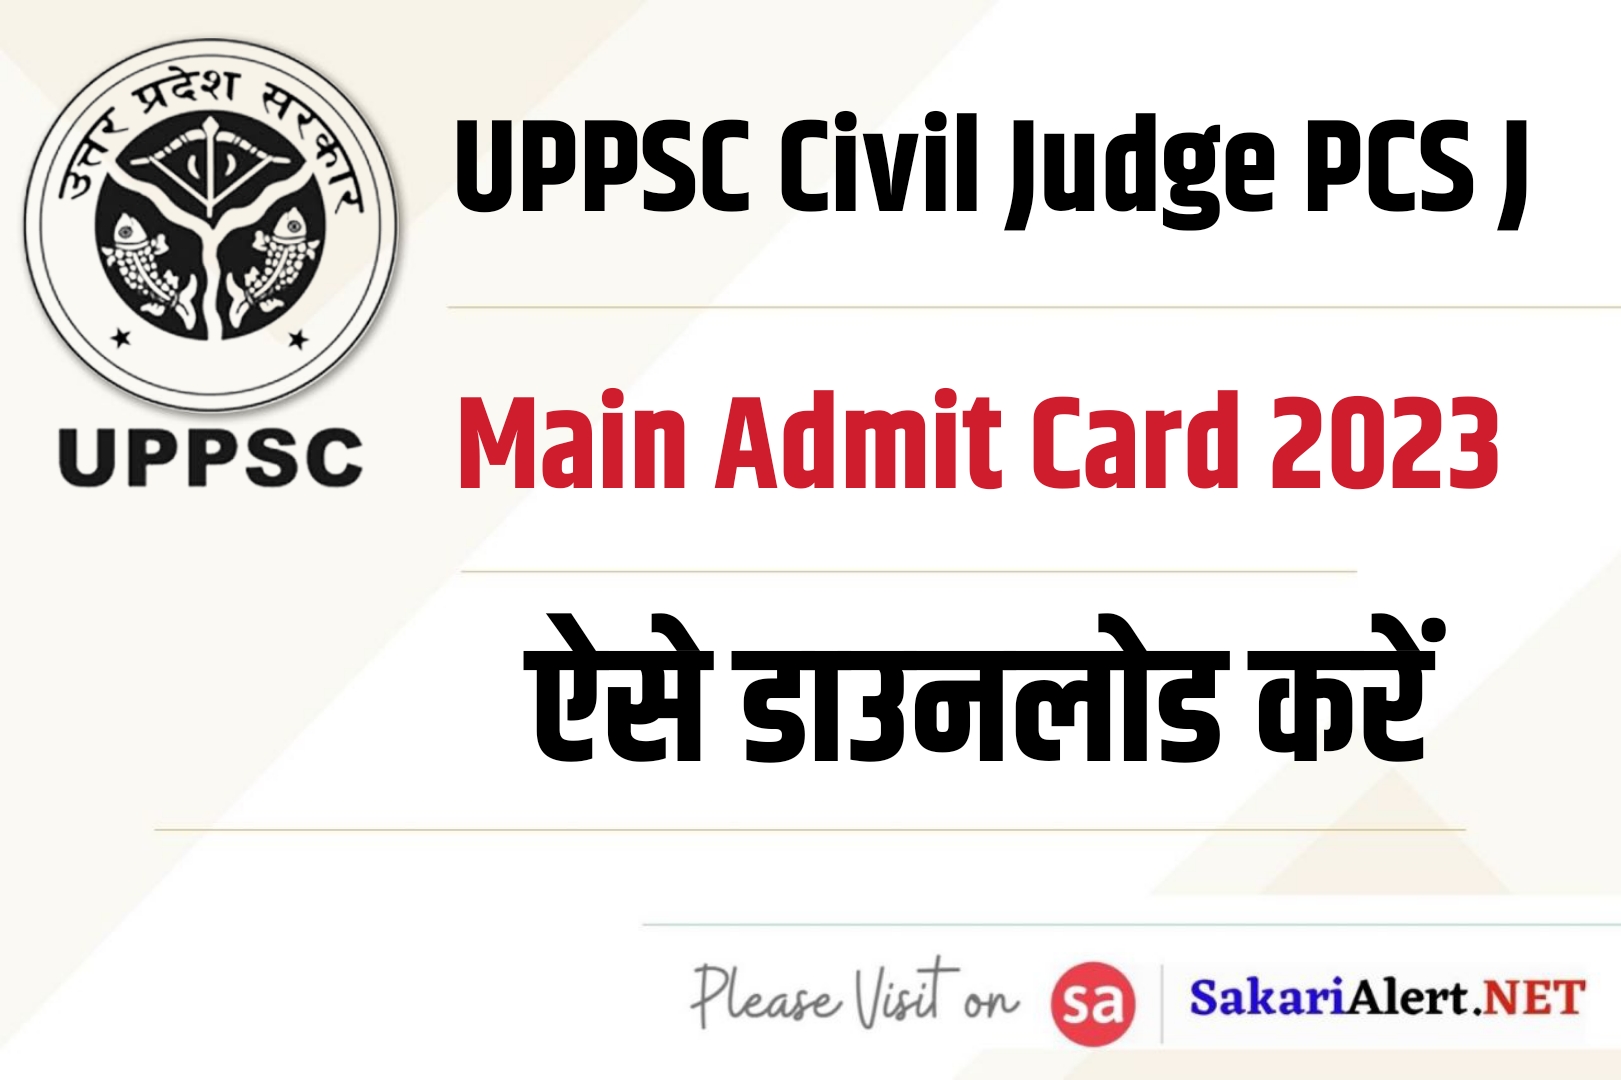 UPPSC Civil Judge PCS J Main Admit Card 2023